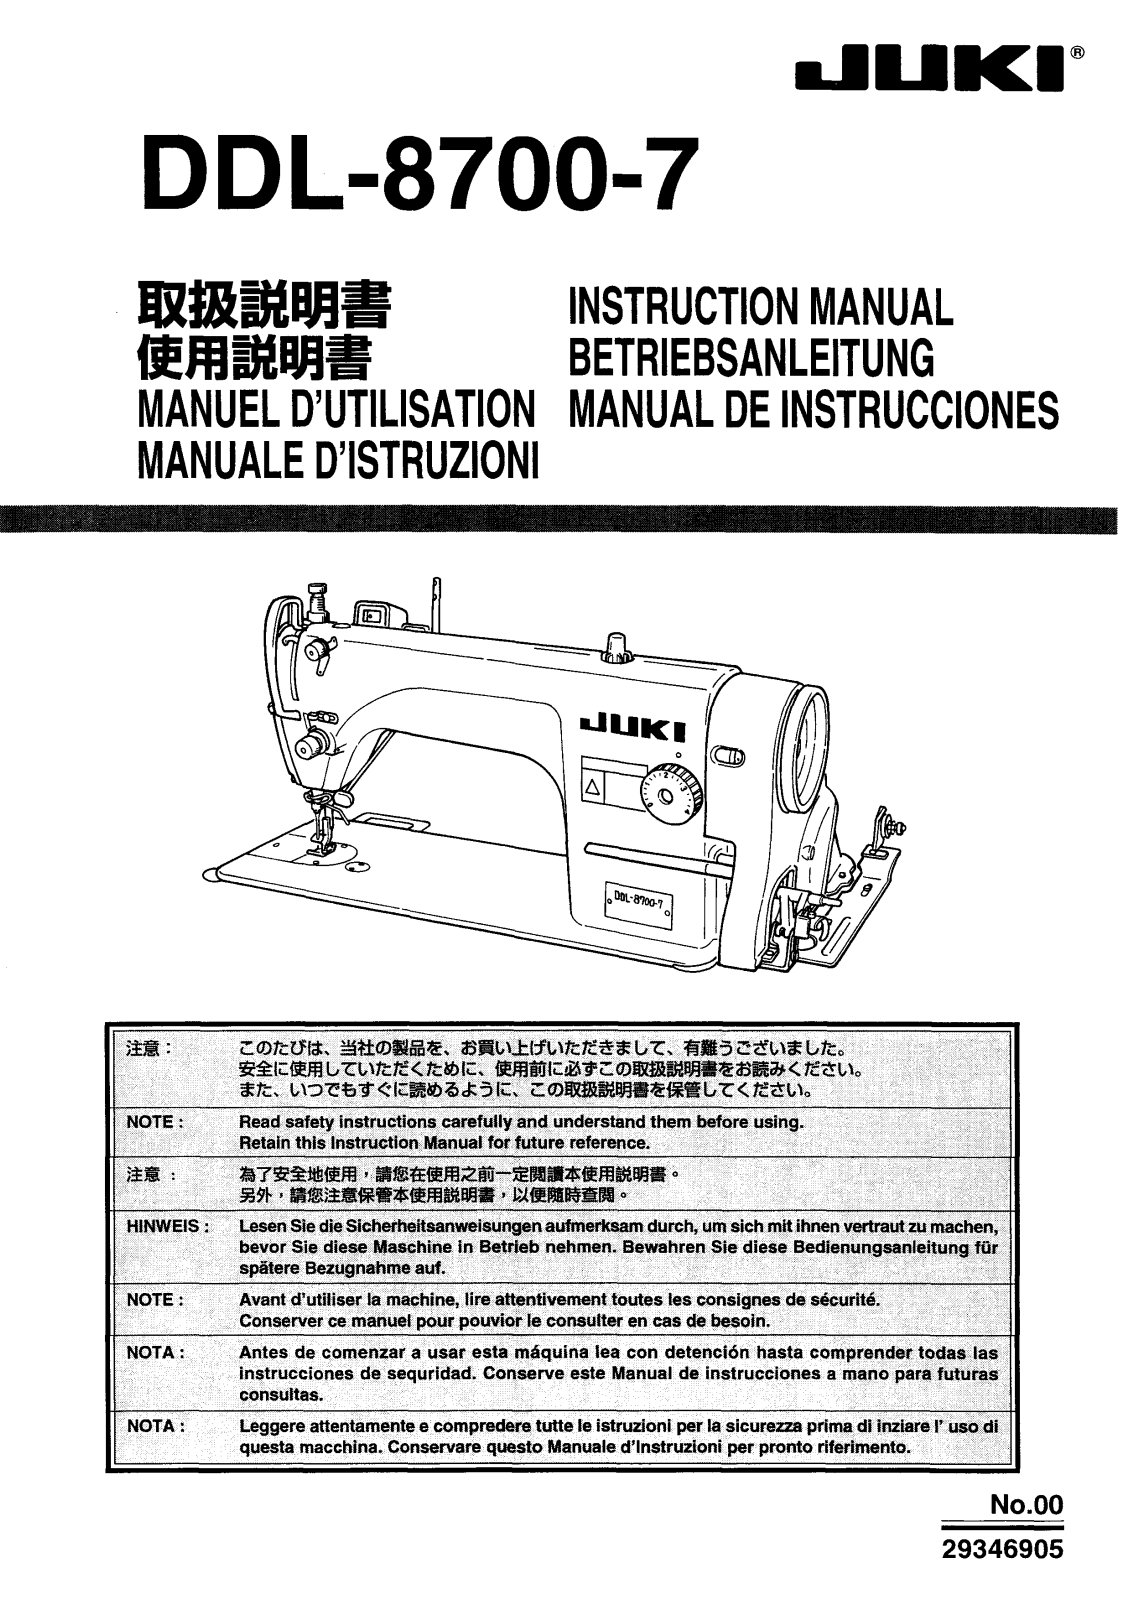 JUKI DDL-8700-7 INSTRUCTION Manual